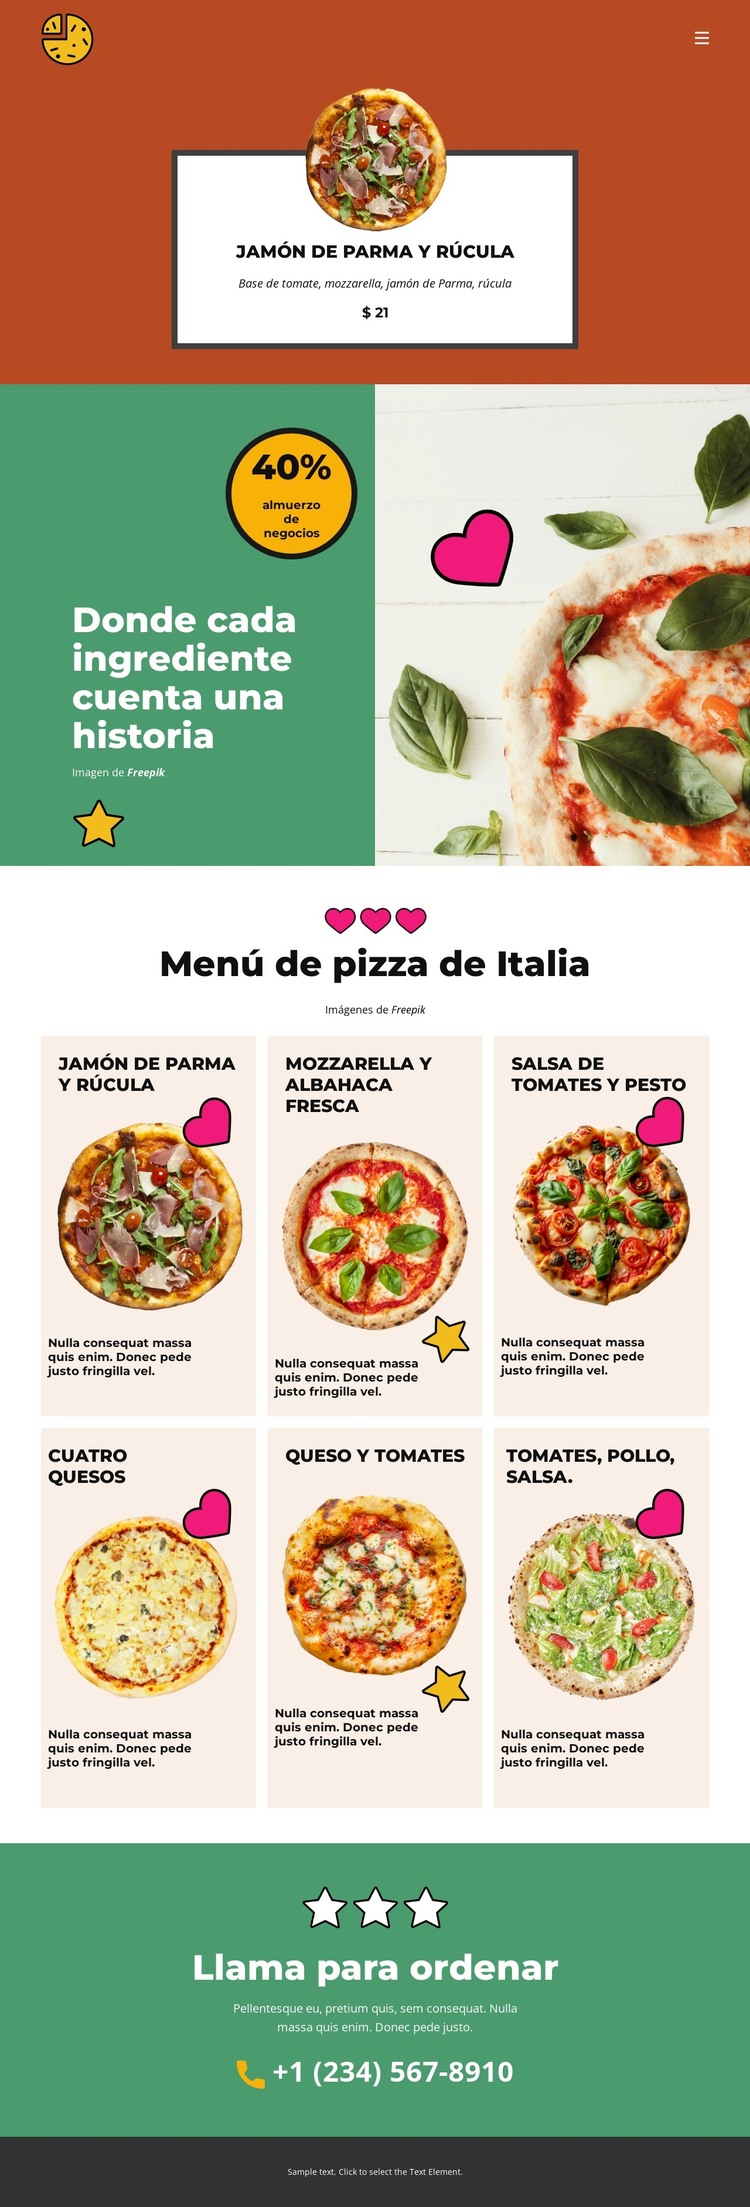 Fun Facts about Pizza Plantilla HTML